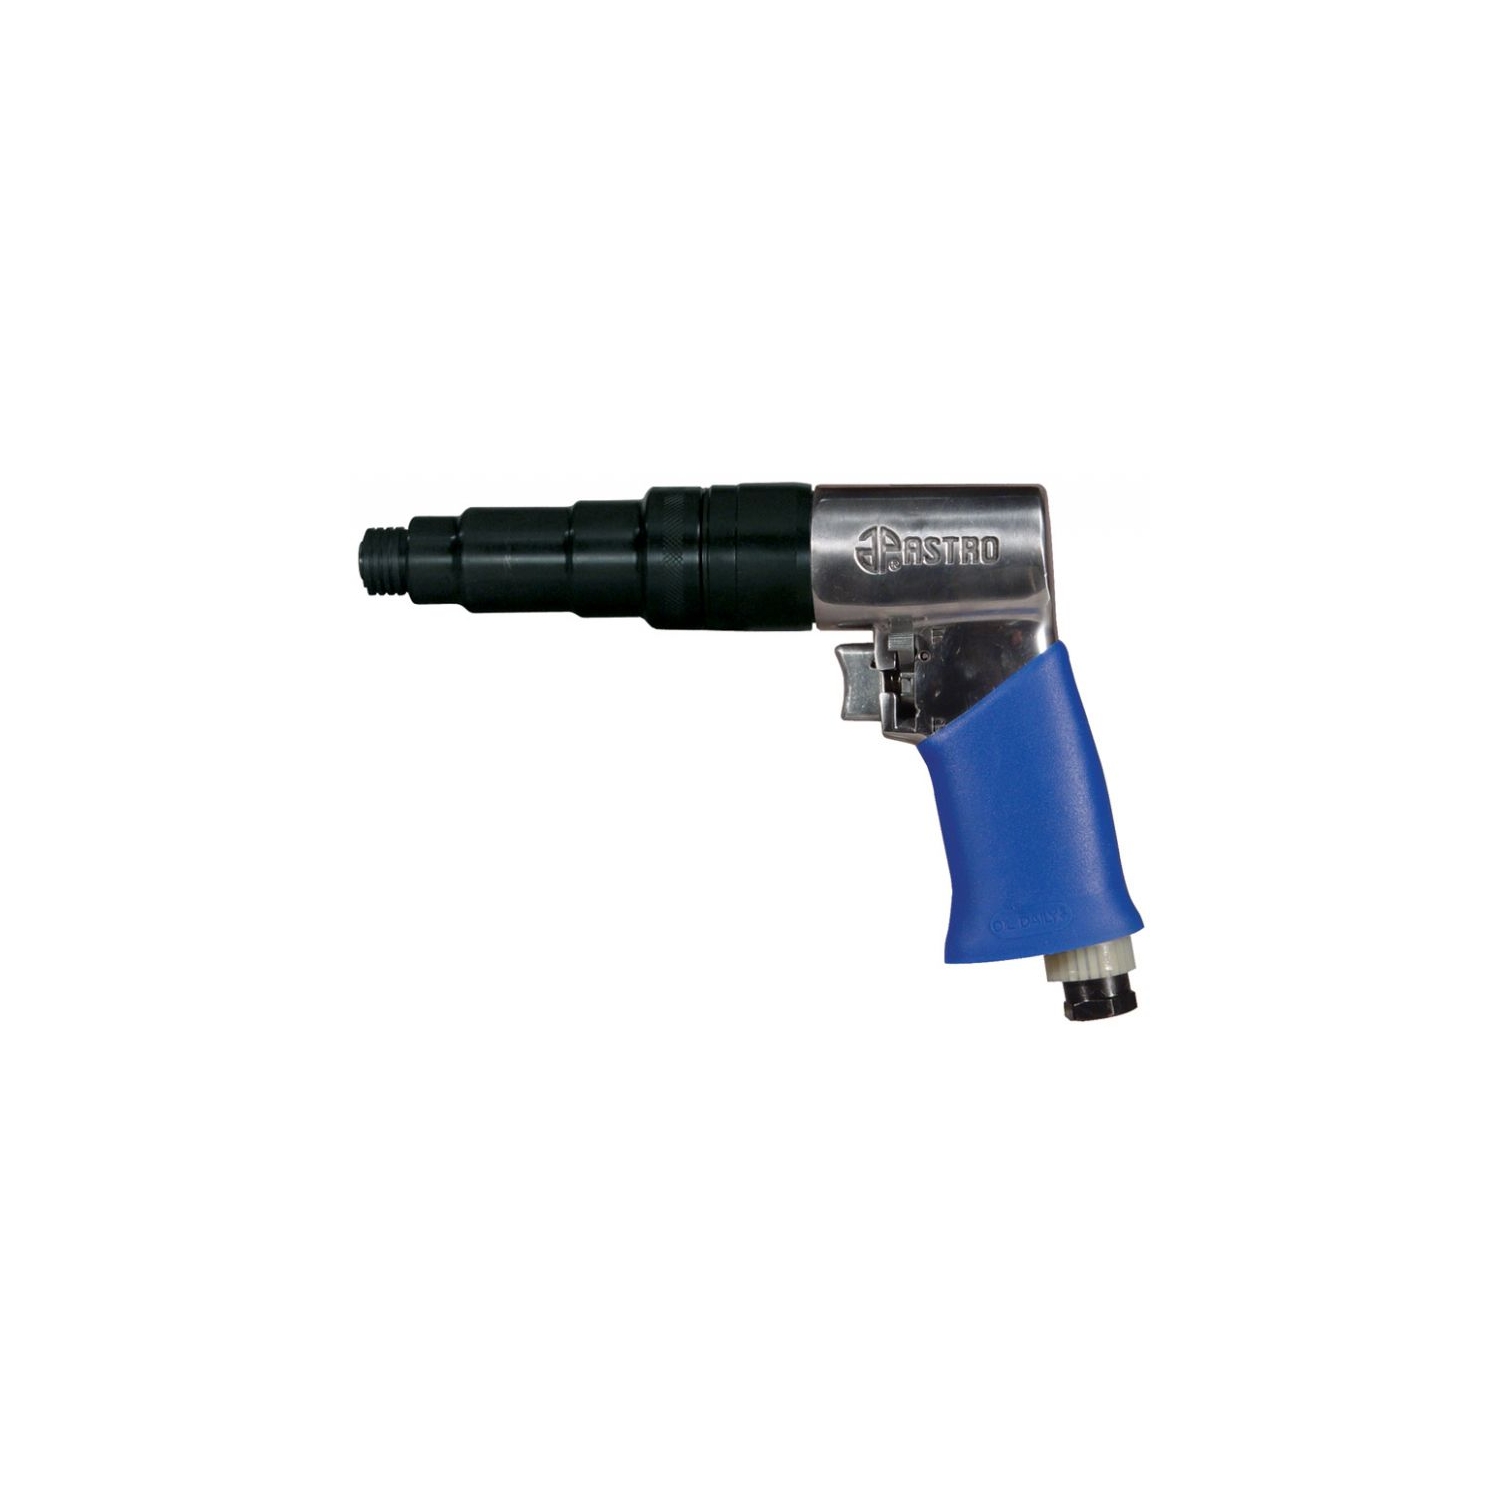 Astro 810T 1/4-Inch Pistol Grip Internal Adjust Screwdriver, 1,800rpm 